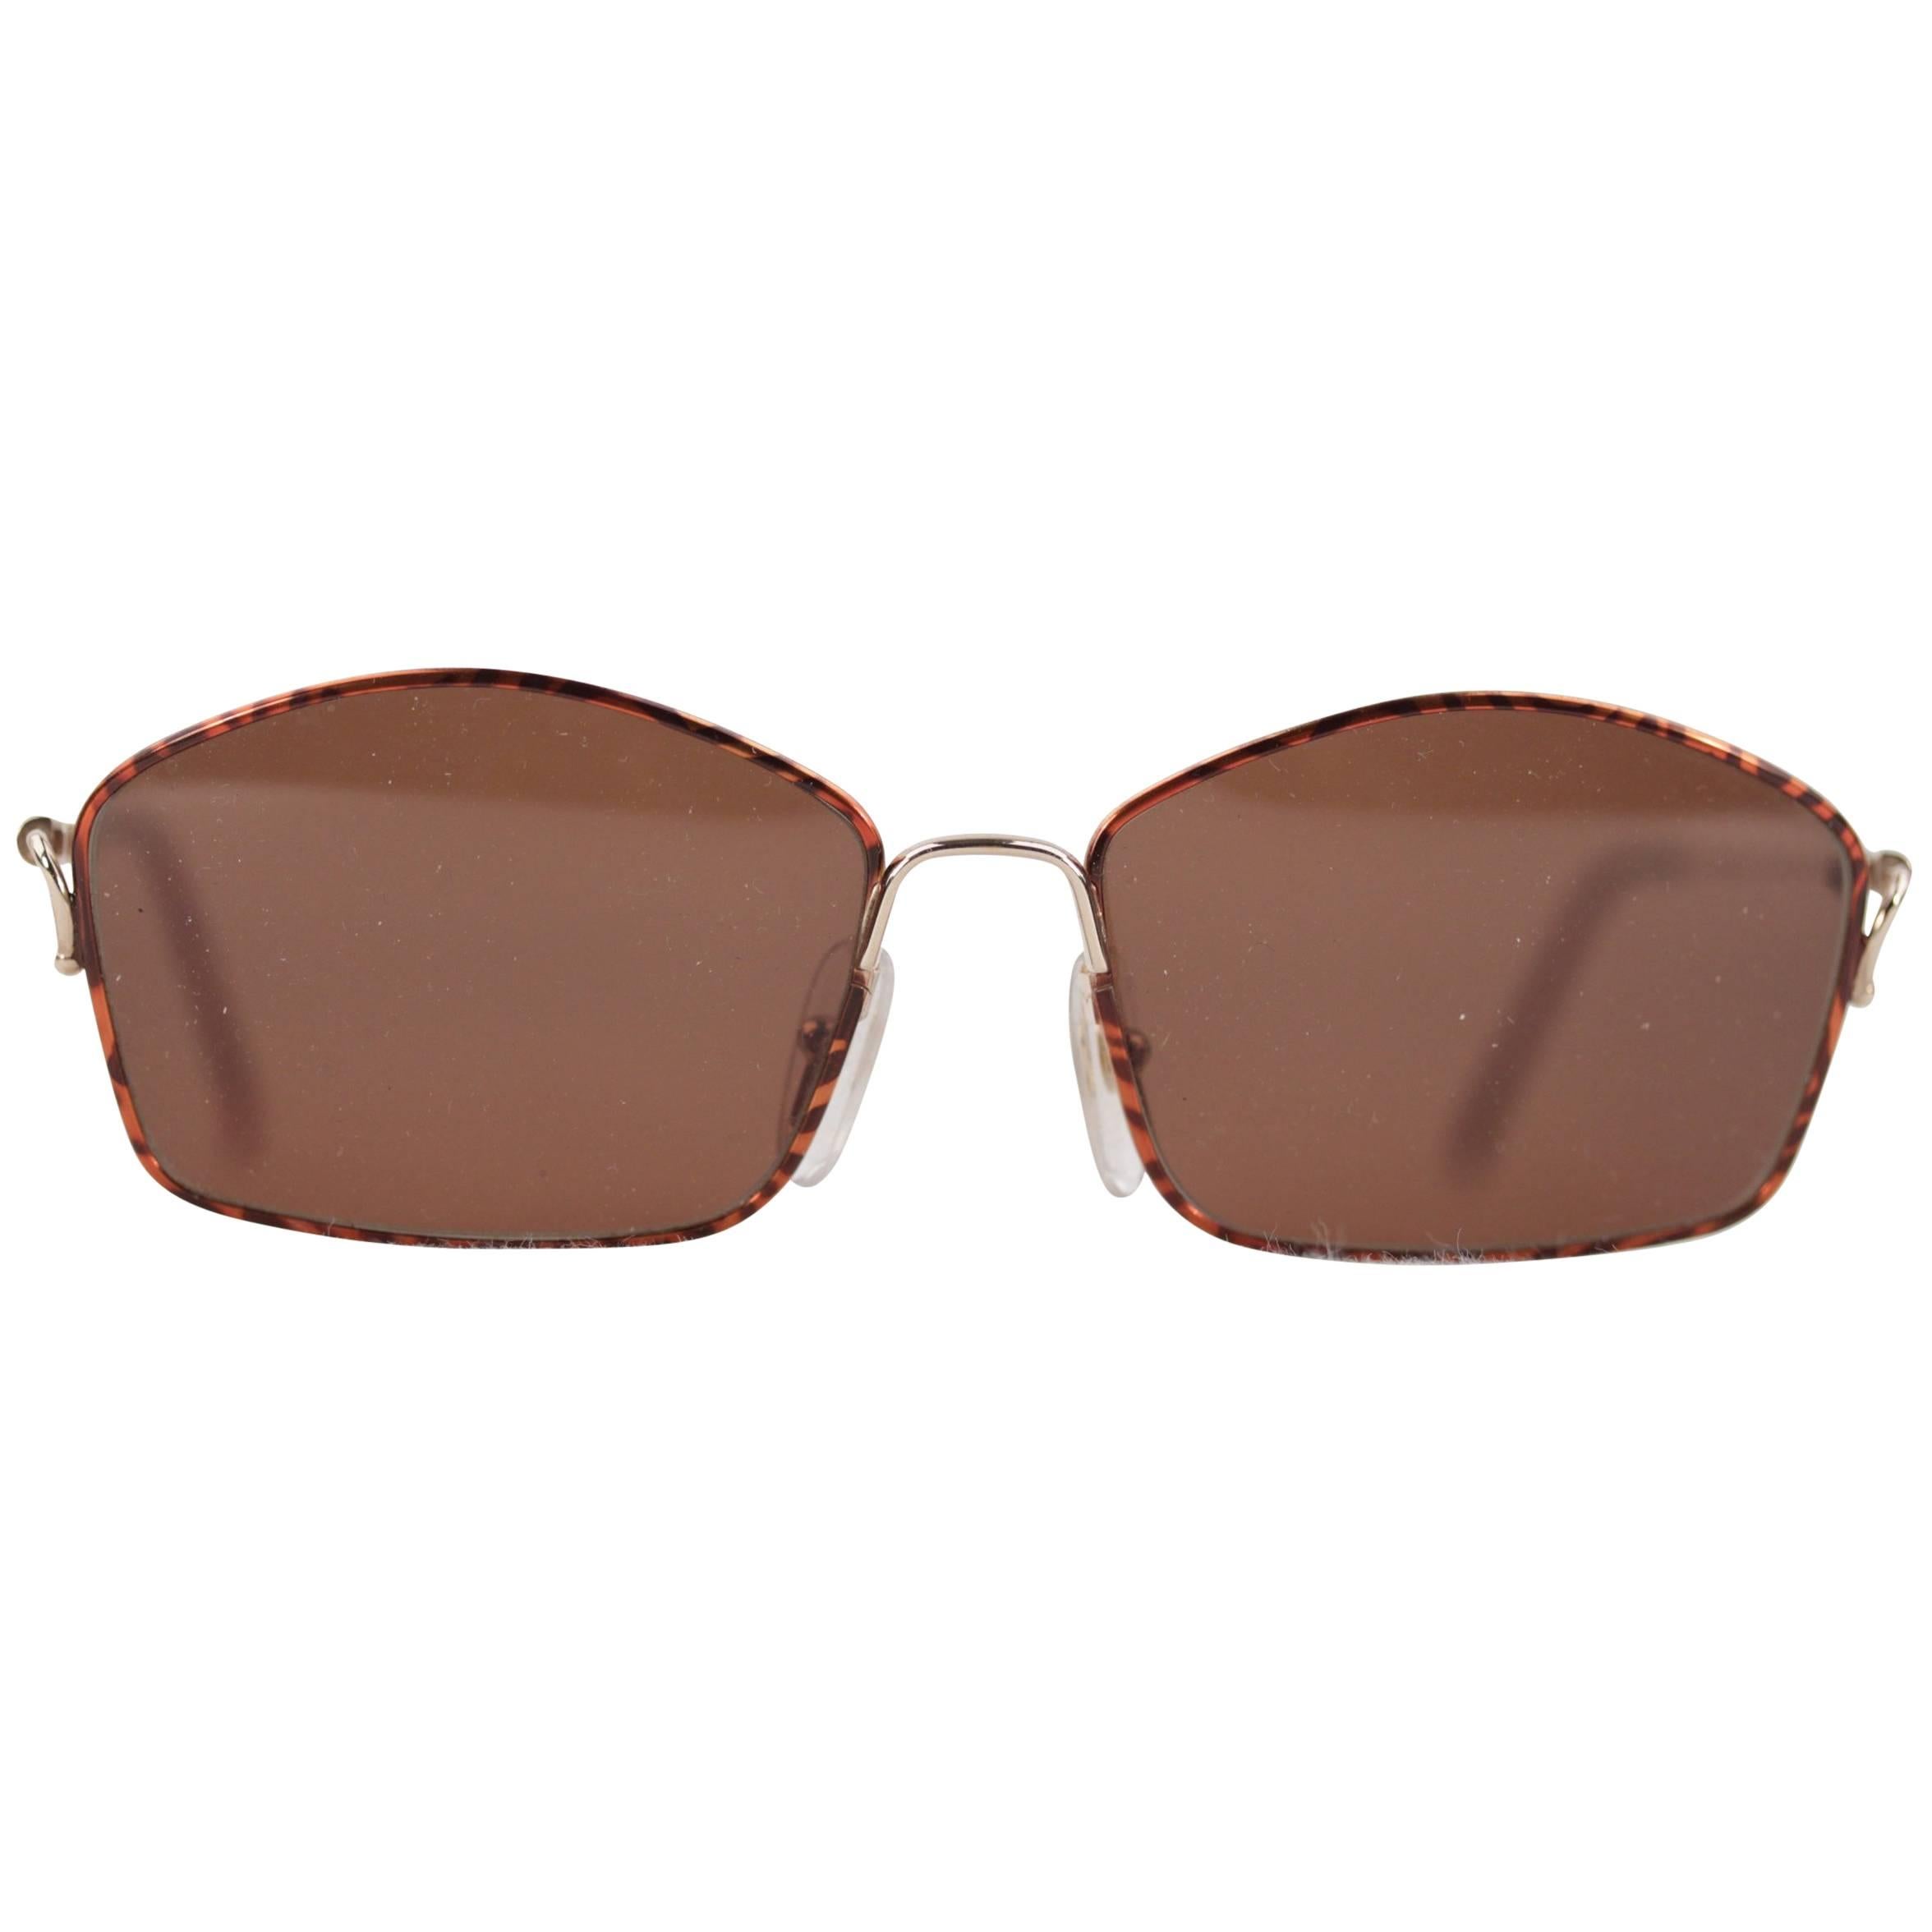 CHRISTIAN DIOR Vintage MINT Sunglasses Brown lens 2600 41 57/16 130